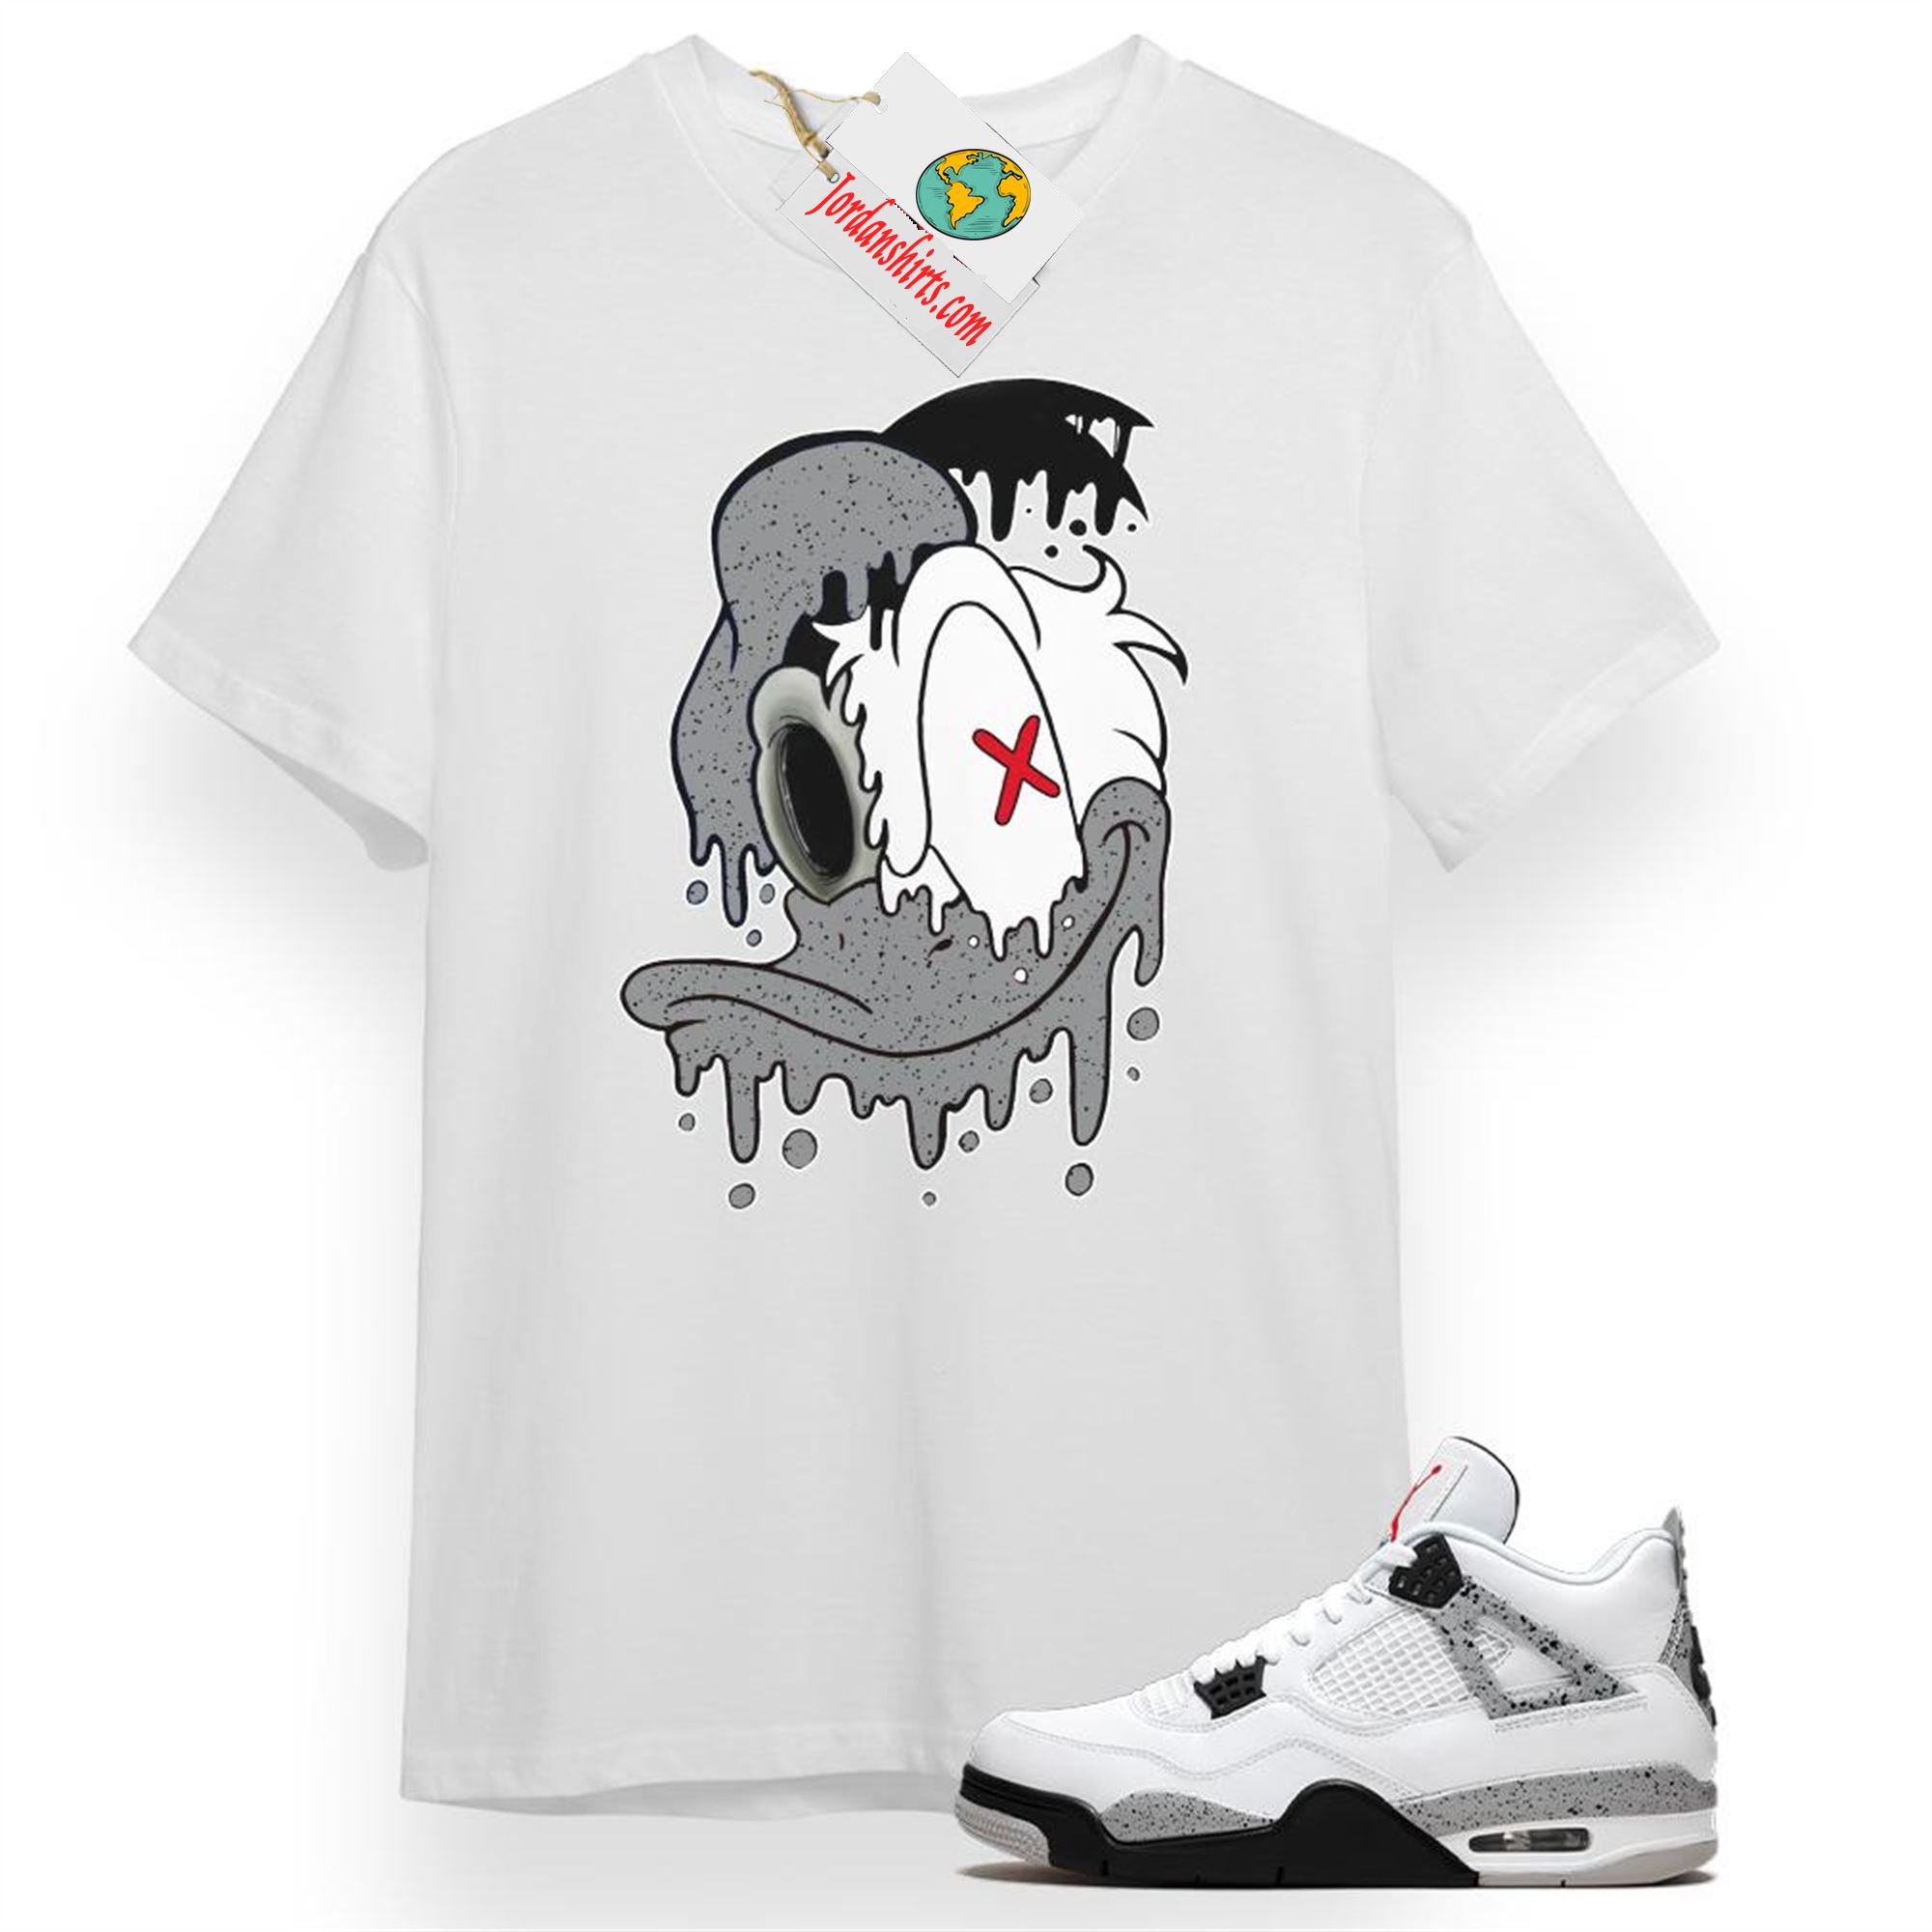 Jordan 4 Shirt, Donald Dripping White T-shirt Air Jordan 4 Cement 4s Size Up To 5xl